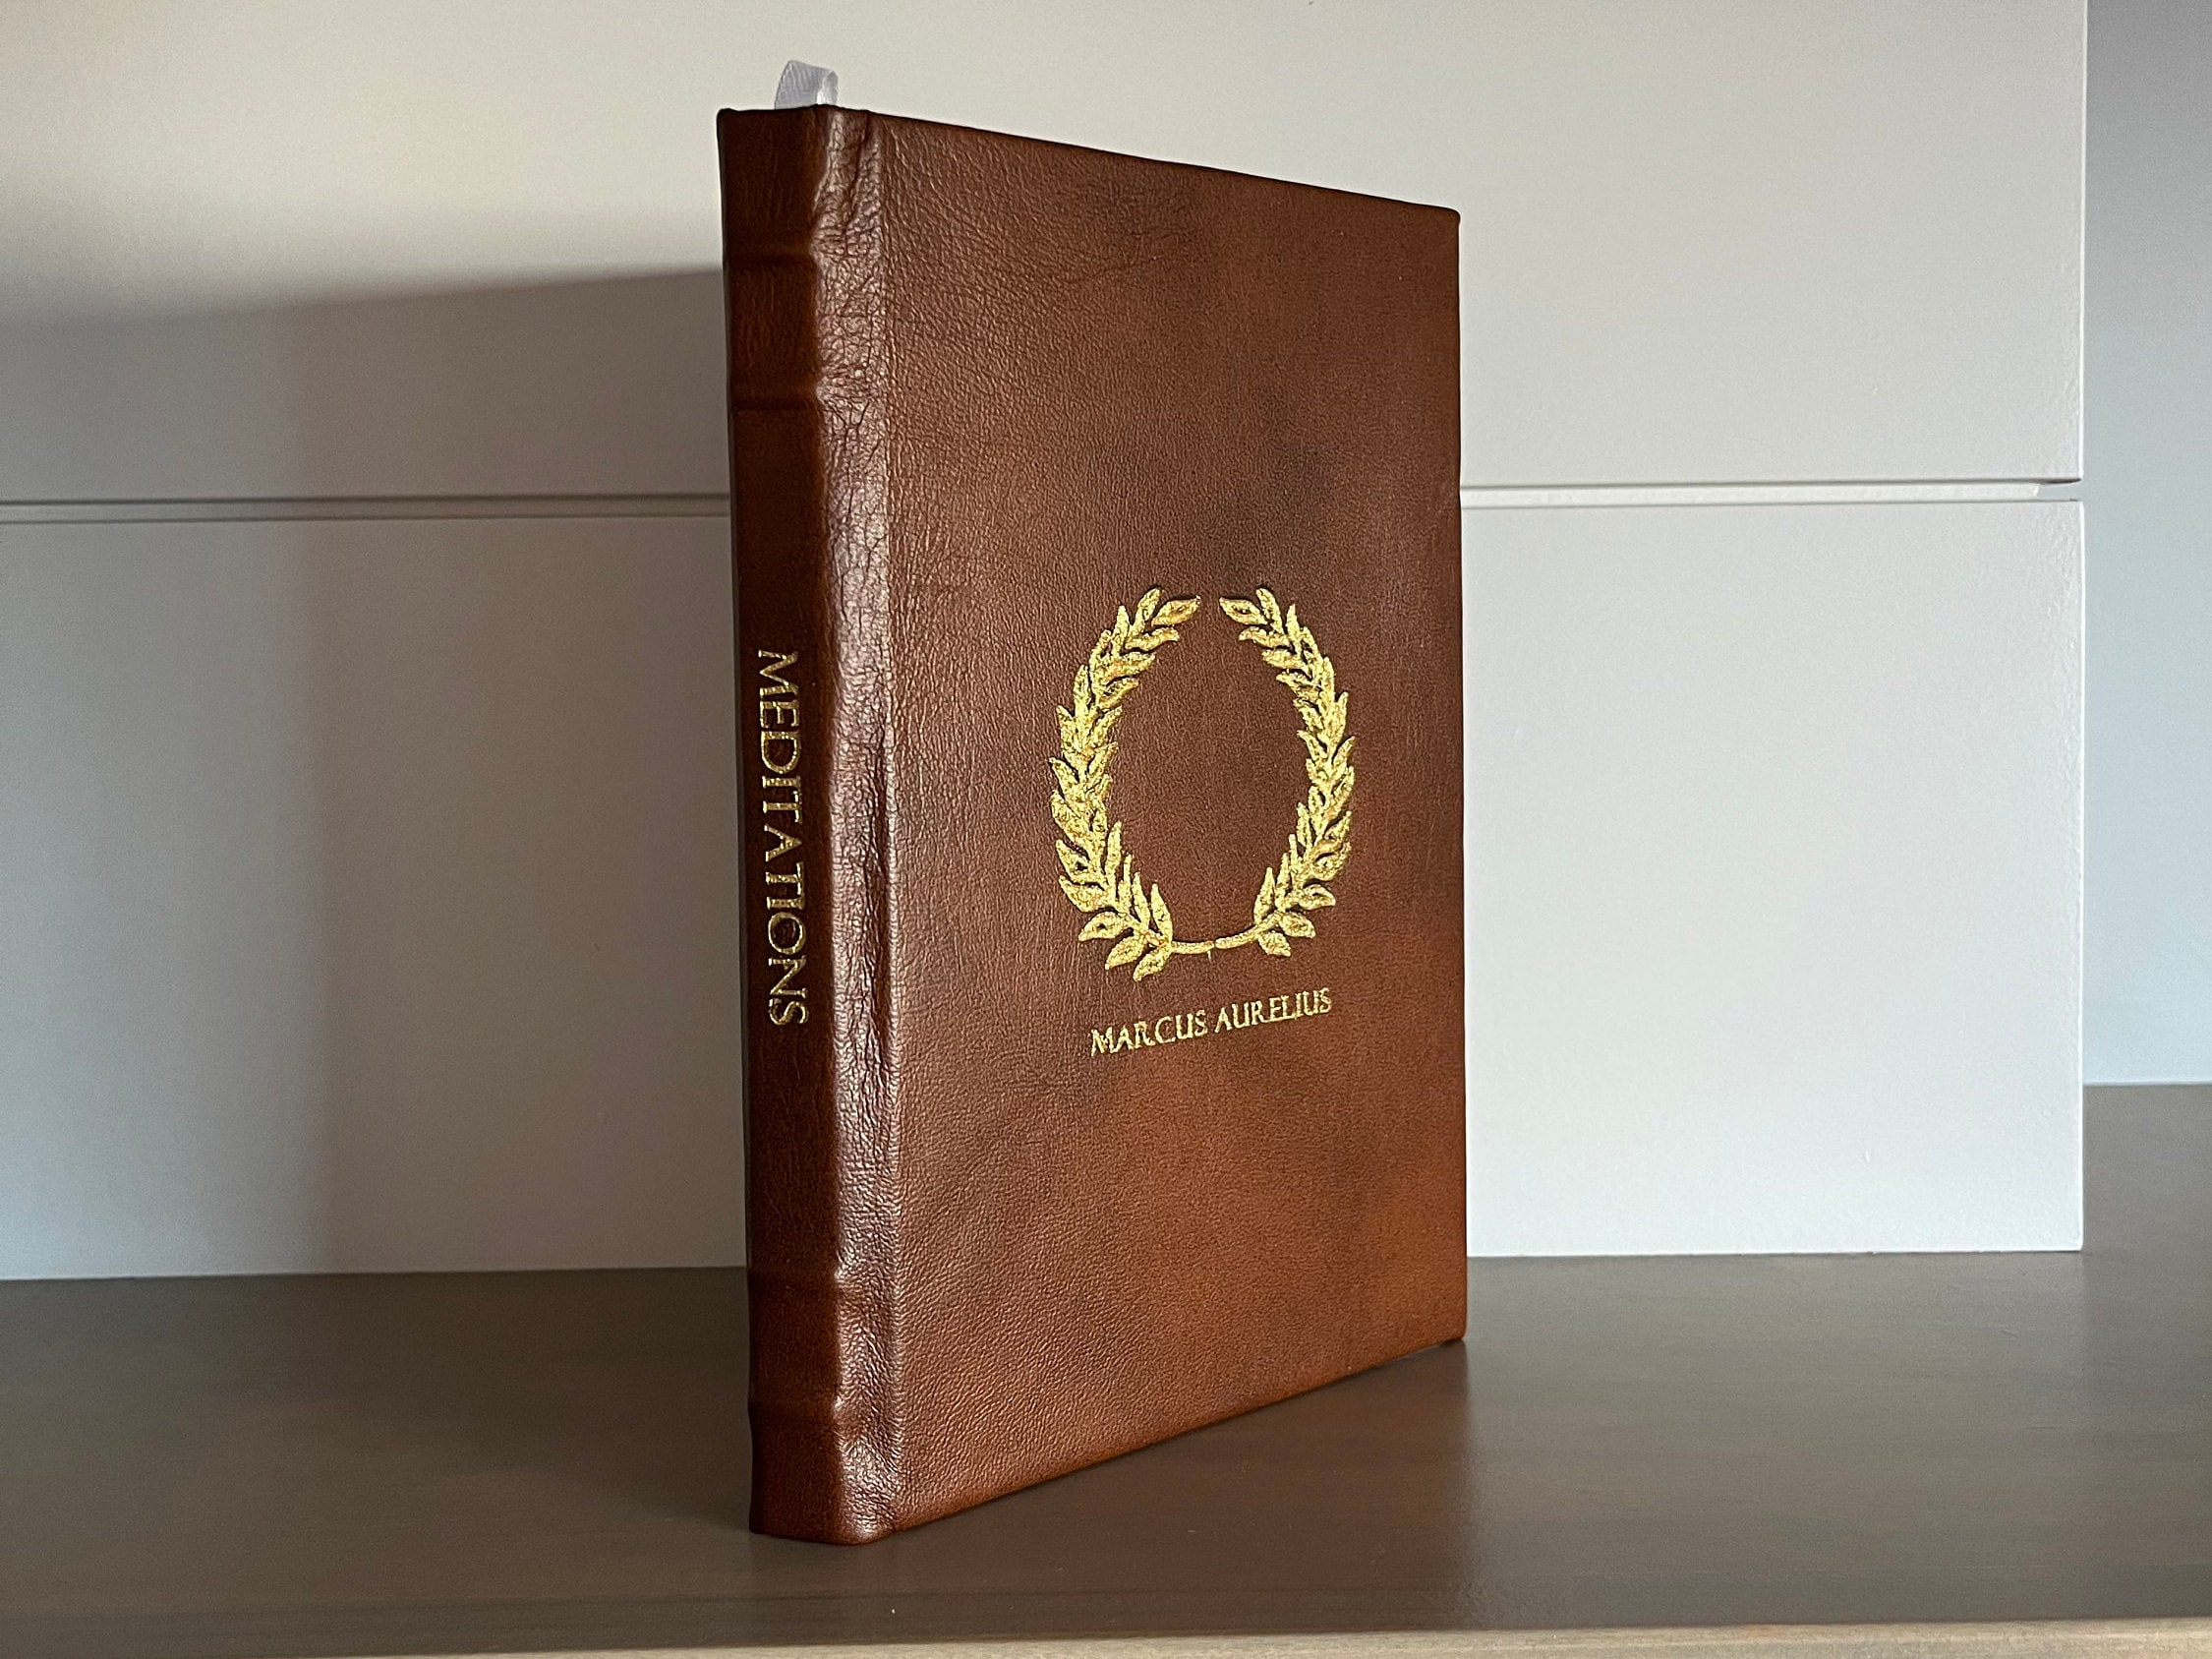 Meditations - Marcus Aurelius (Premium Leather Edition) [Gregory Hays –  Daily Stoic Store